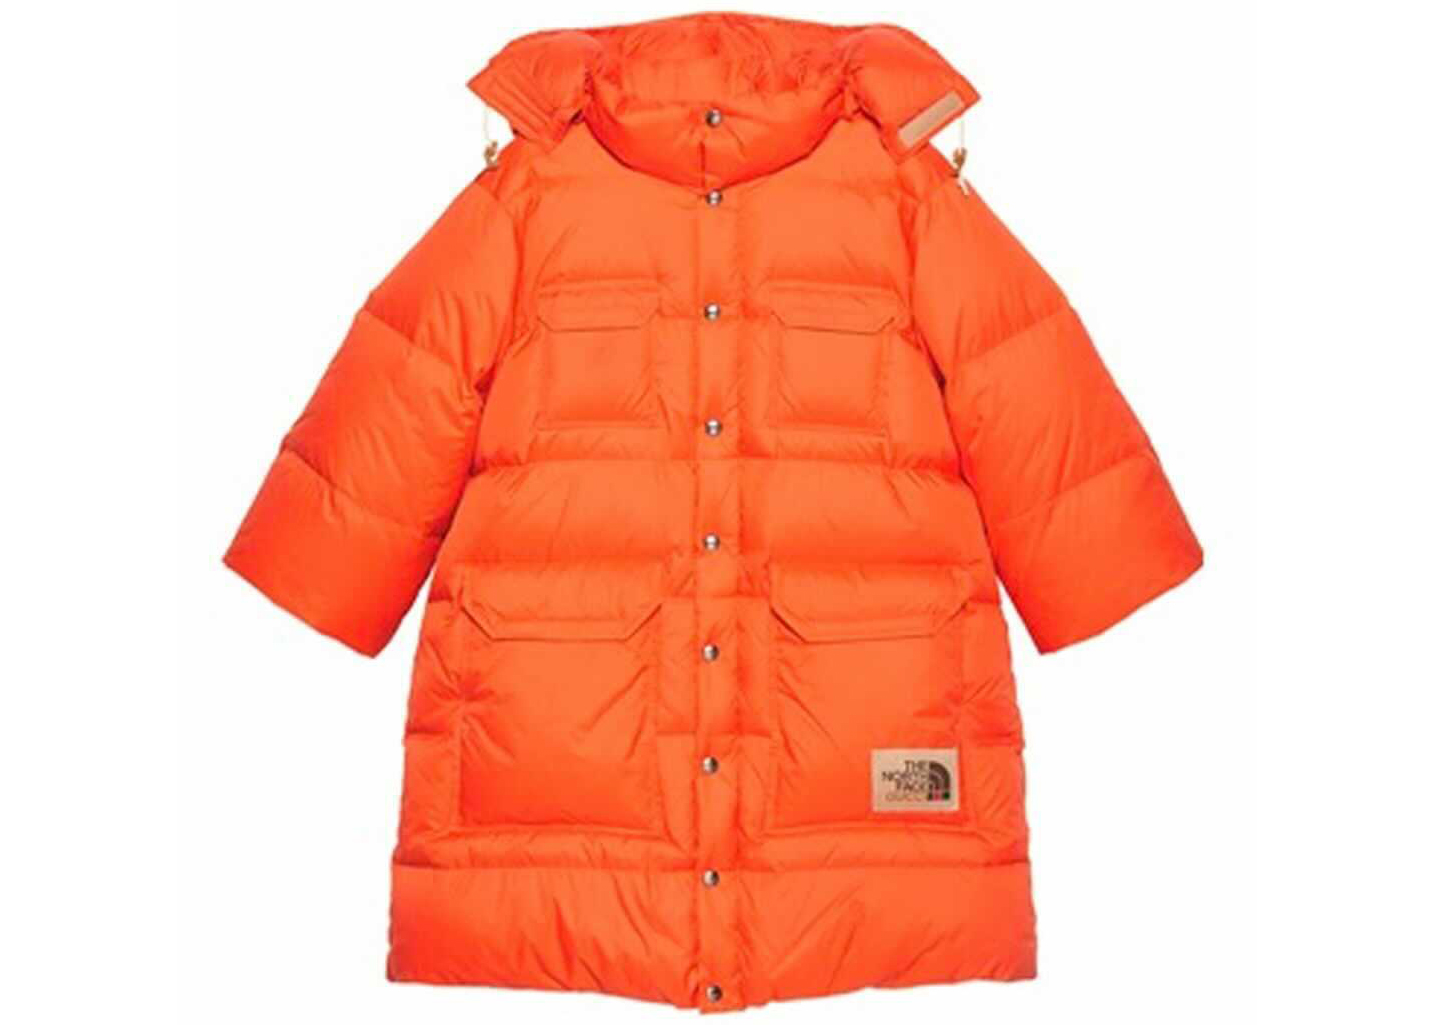 Gucci x The North Face Nylon Jacket Orange - SS21 - US